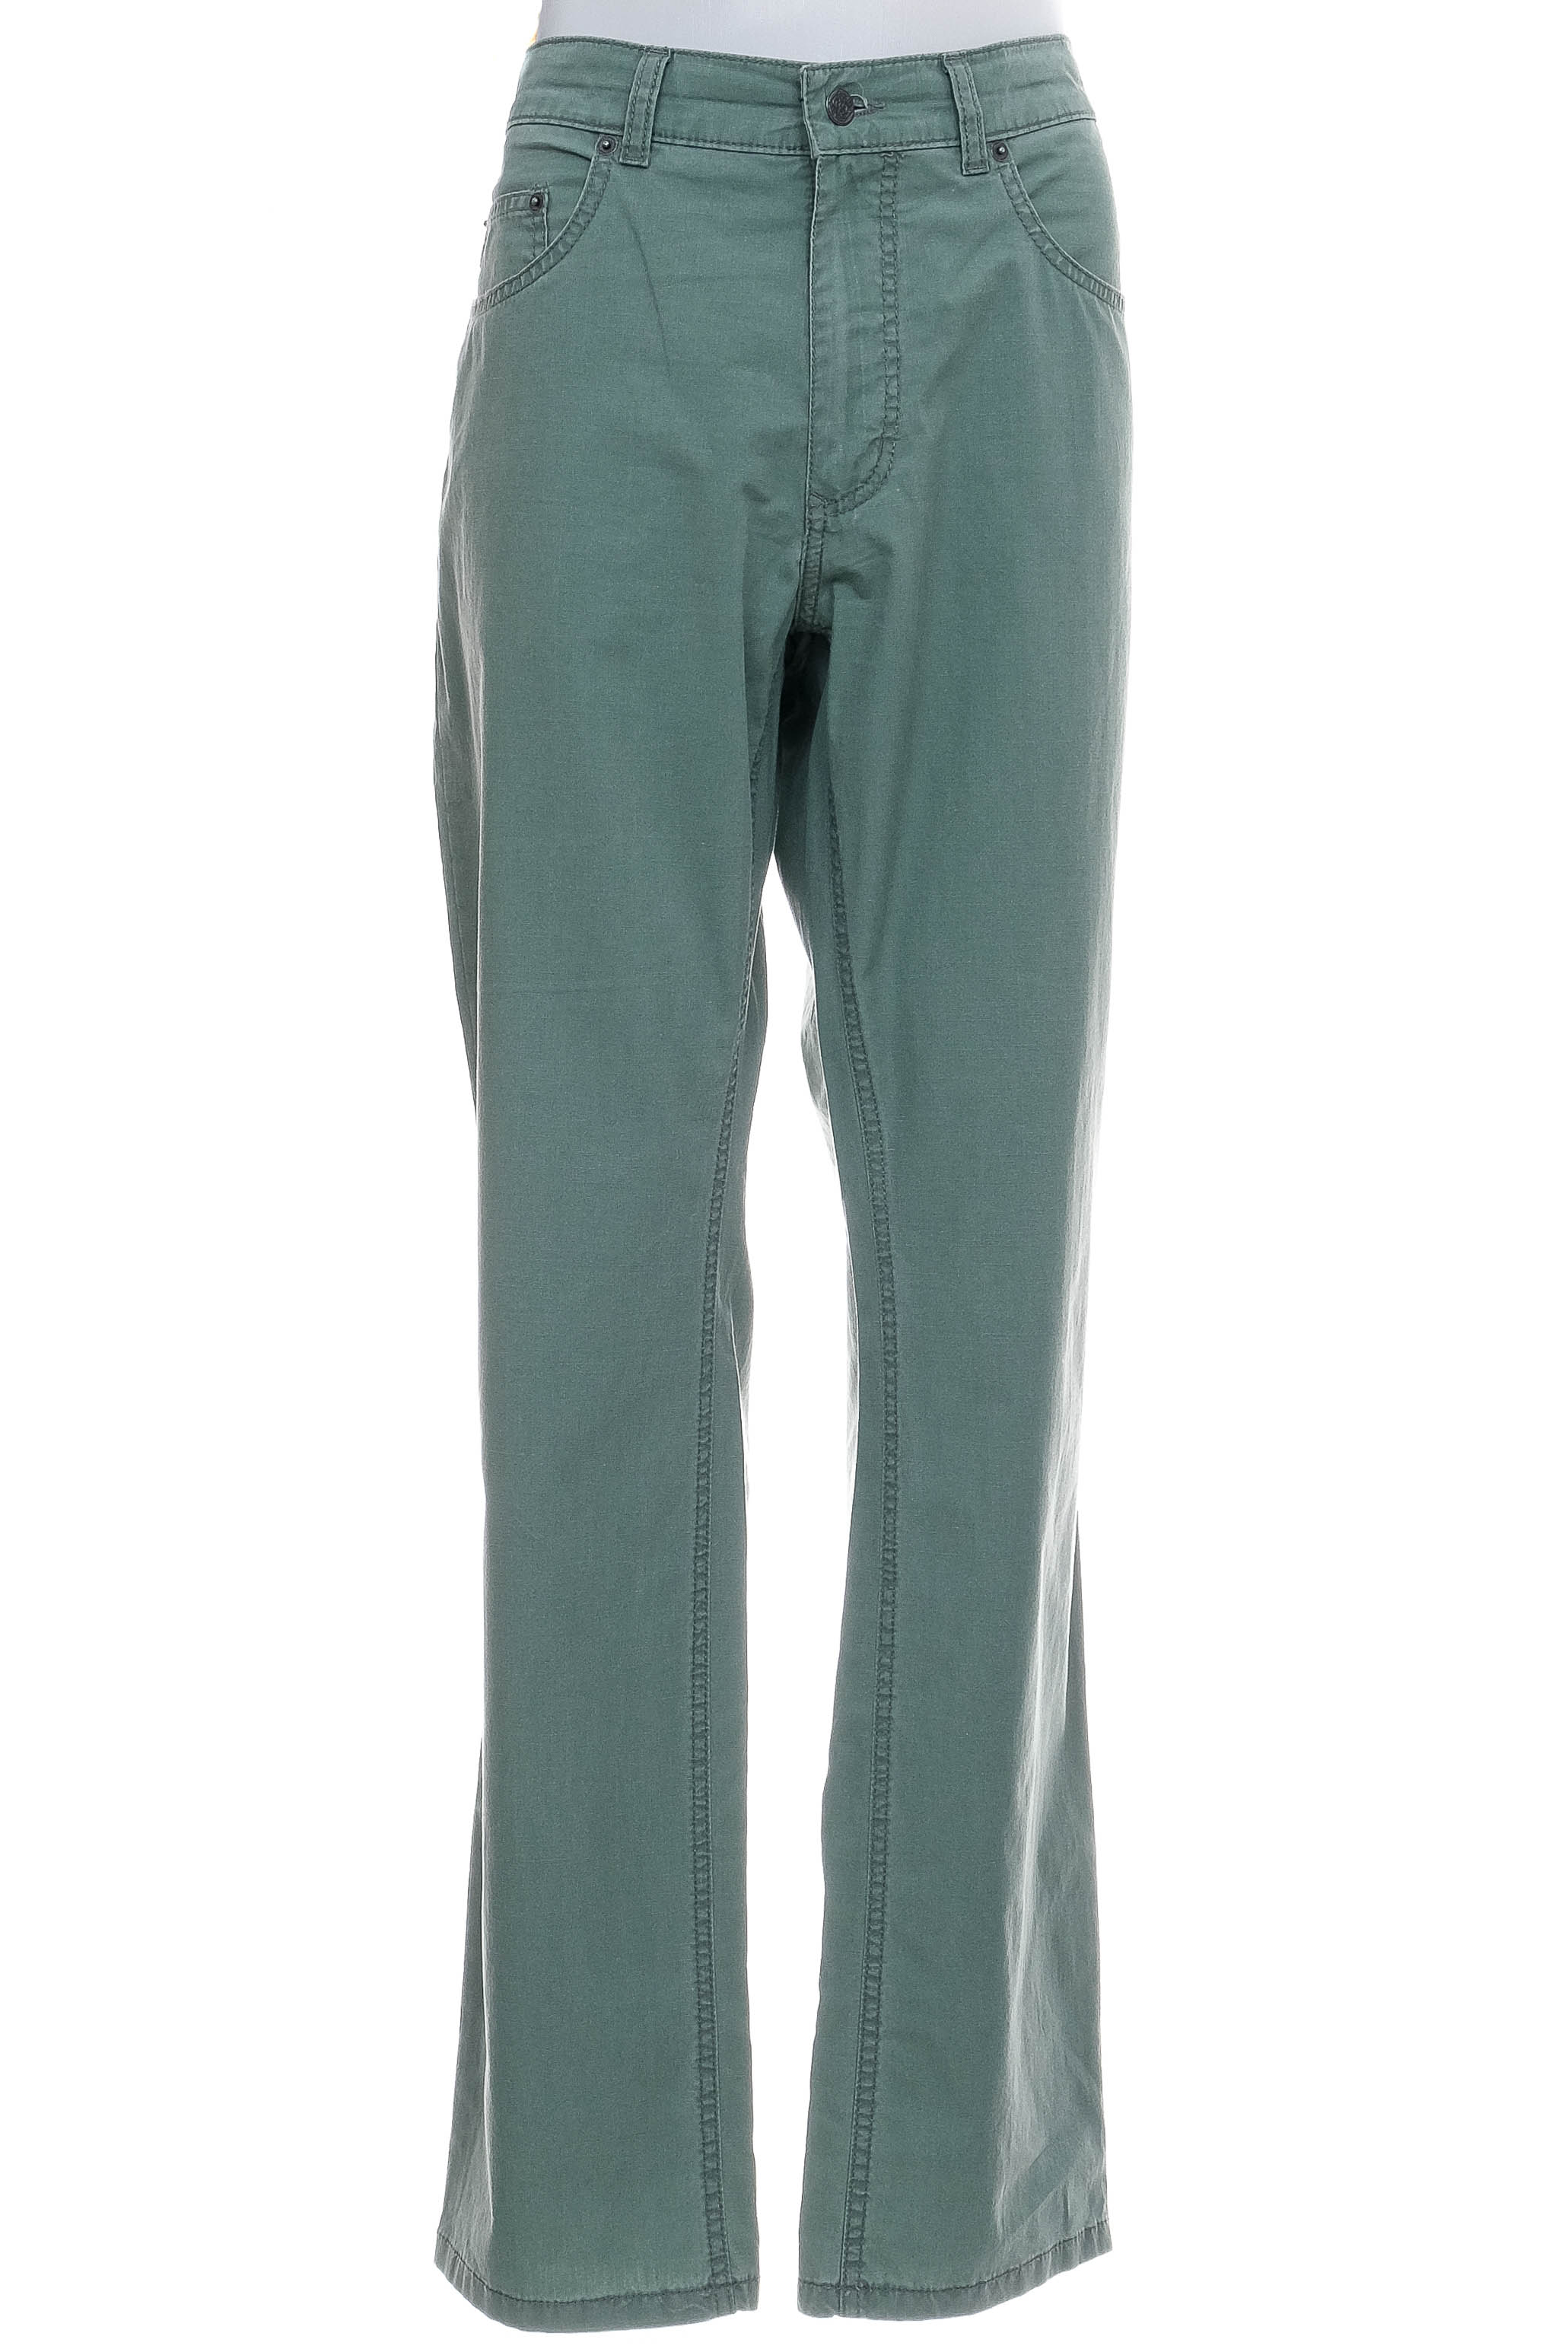 Pantalon pentru bărbați - Pioneer - 0